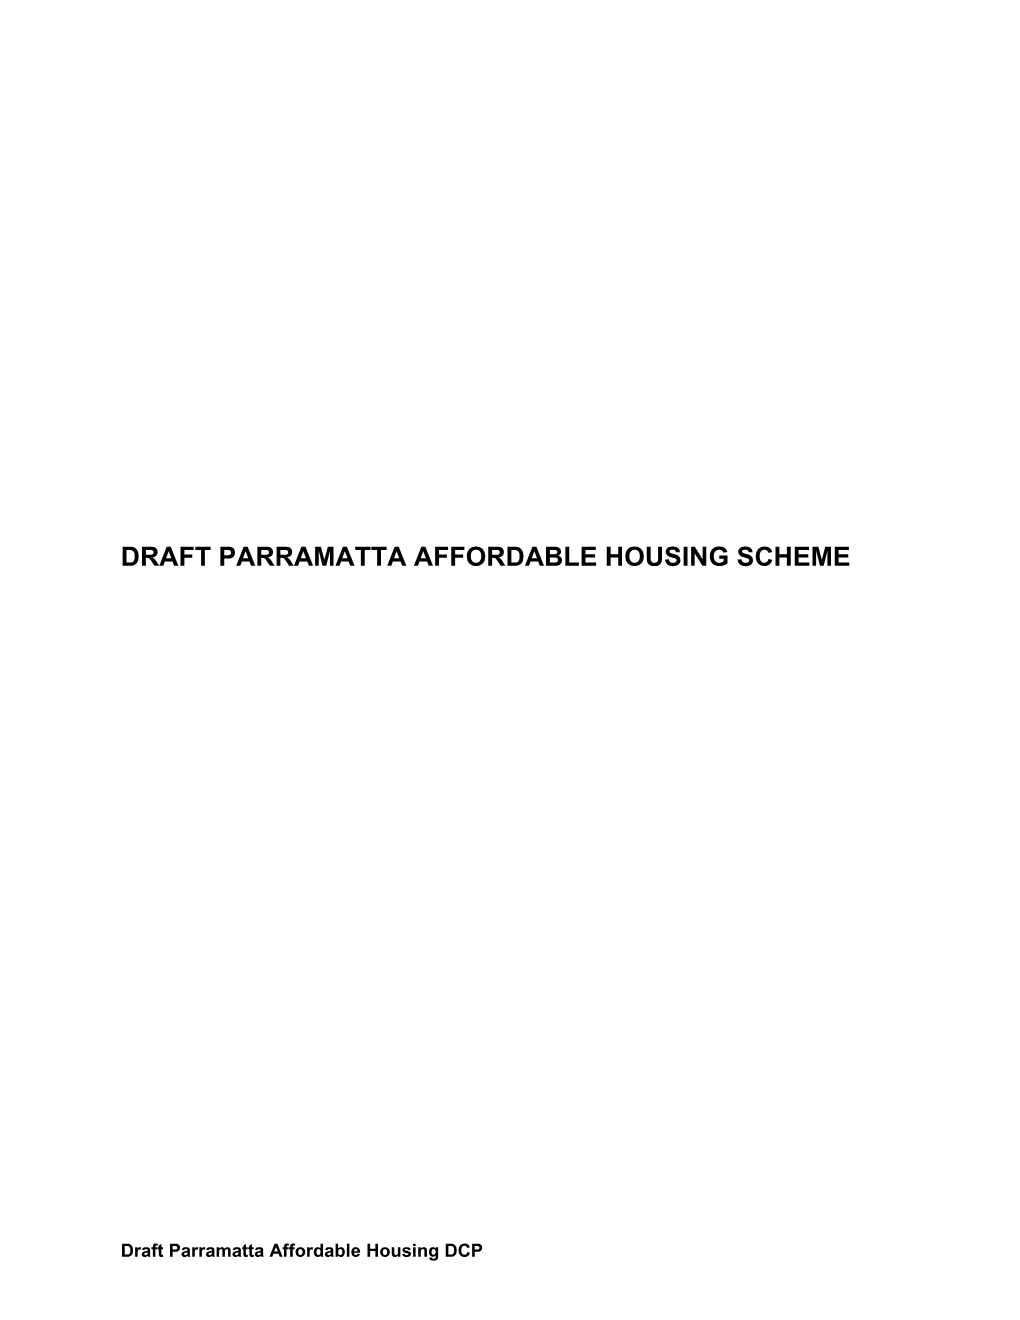 Draft Parramatta Affordable Housing Development Control Plan